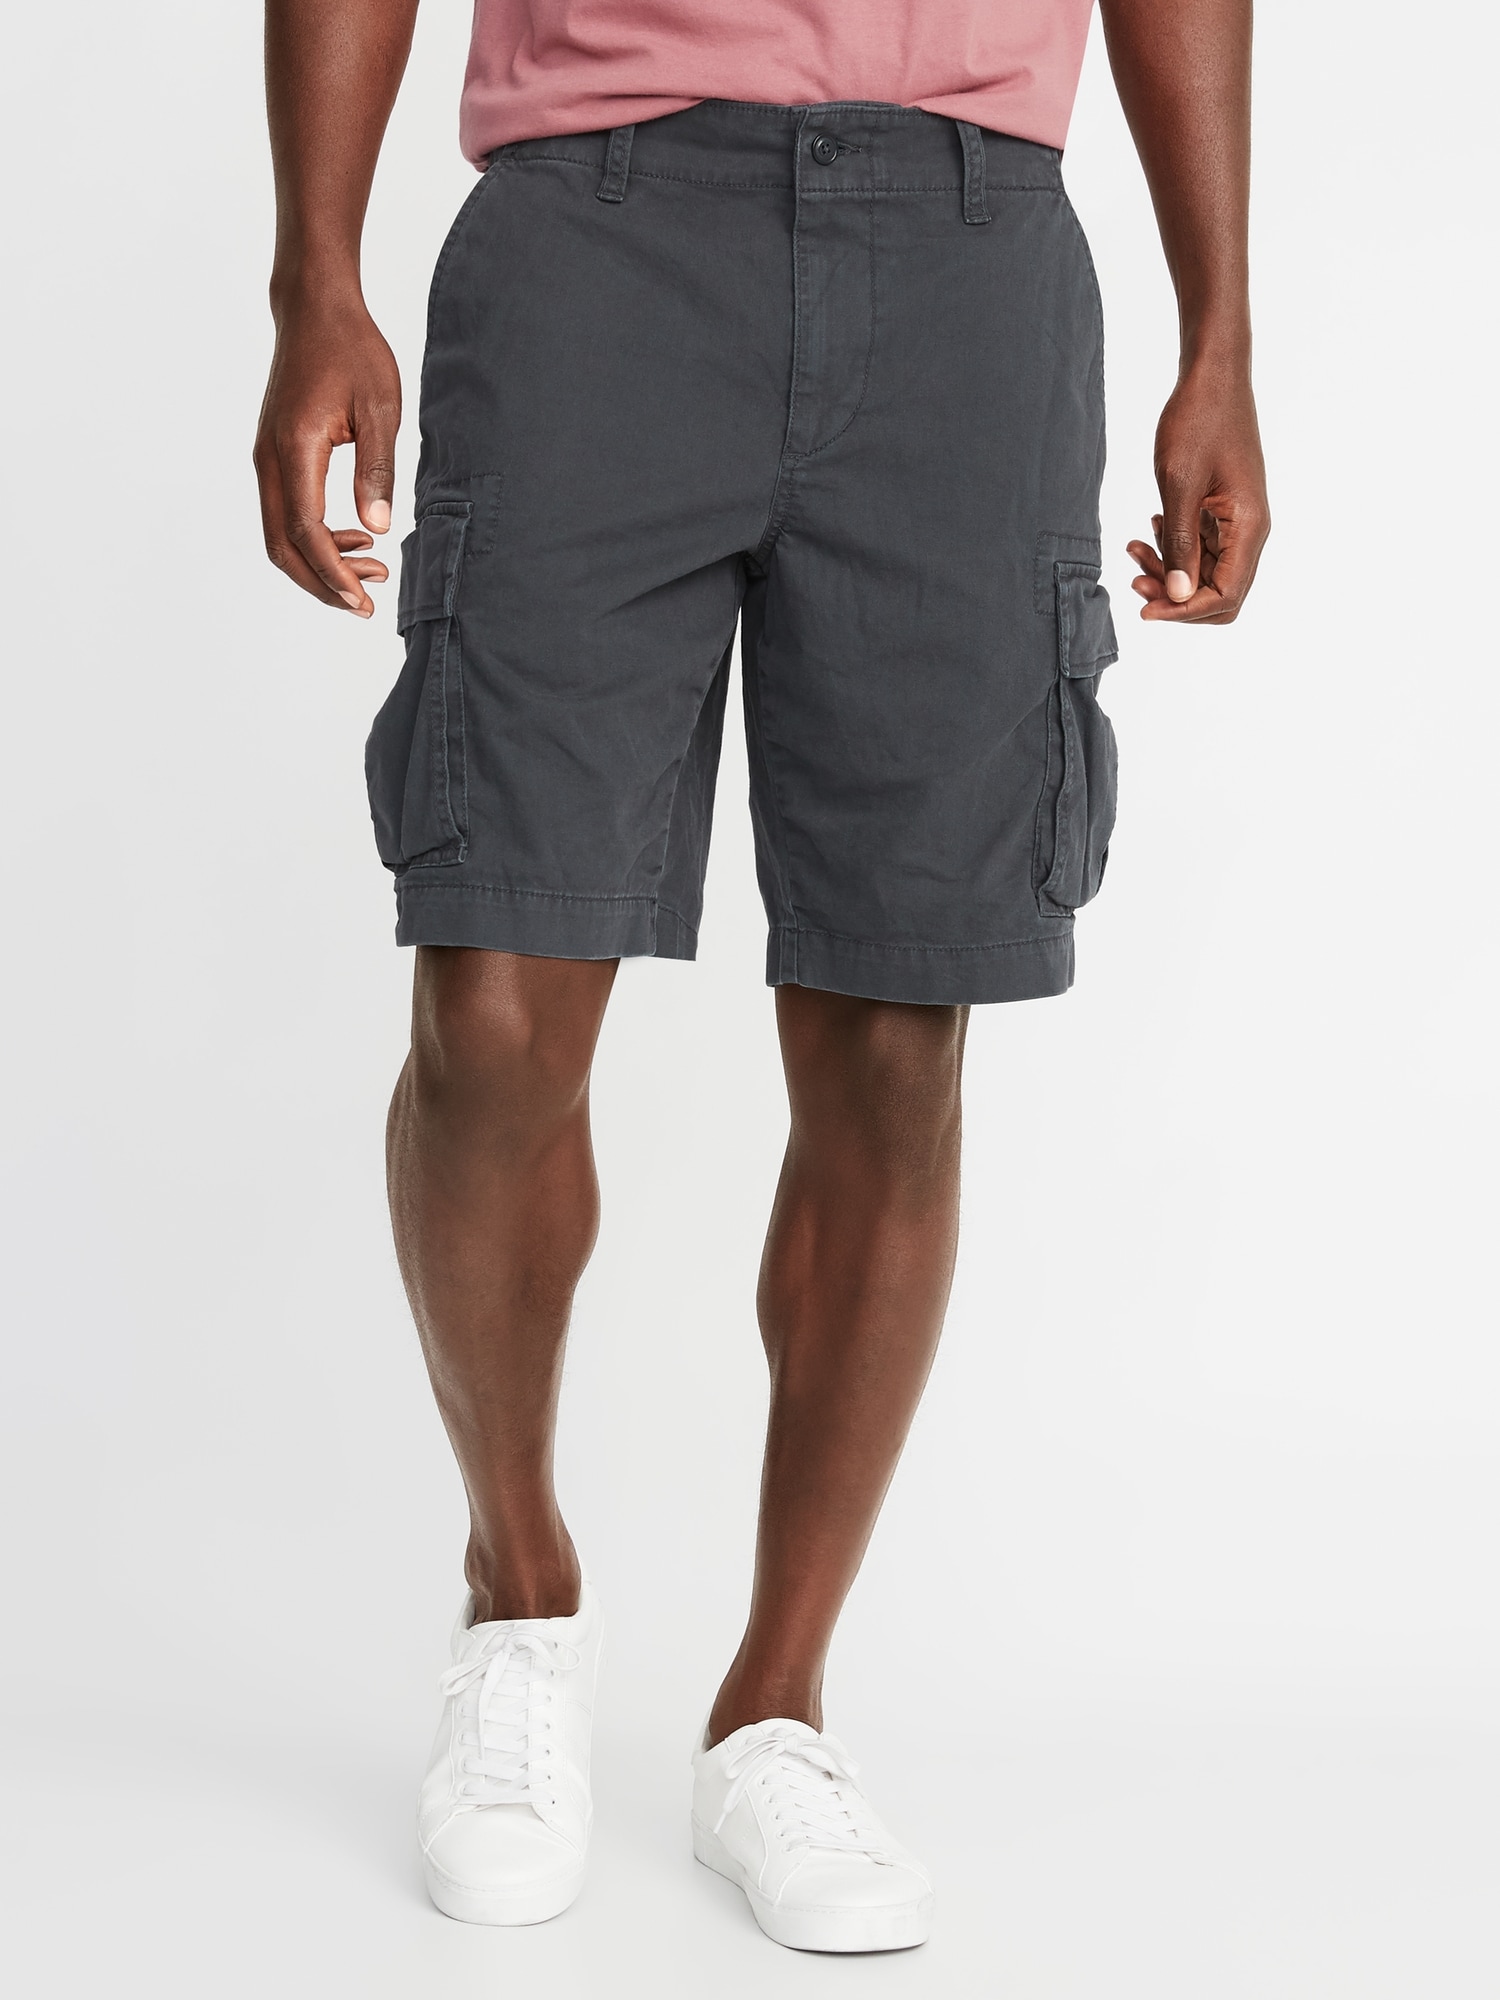 Lived-In Built-In Flex Cargo Shorts for Men - 10-inch inseam